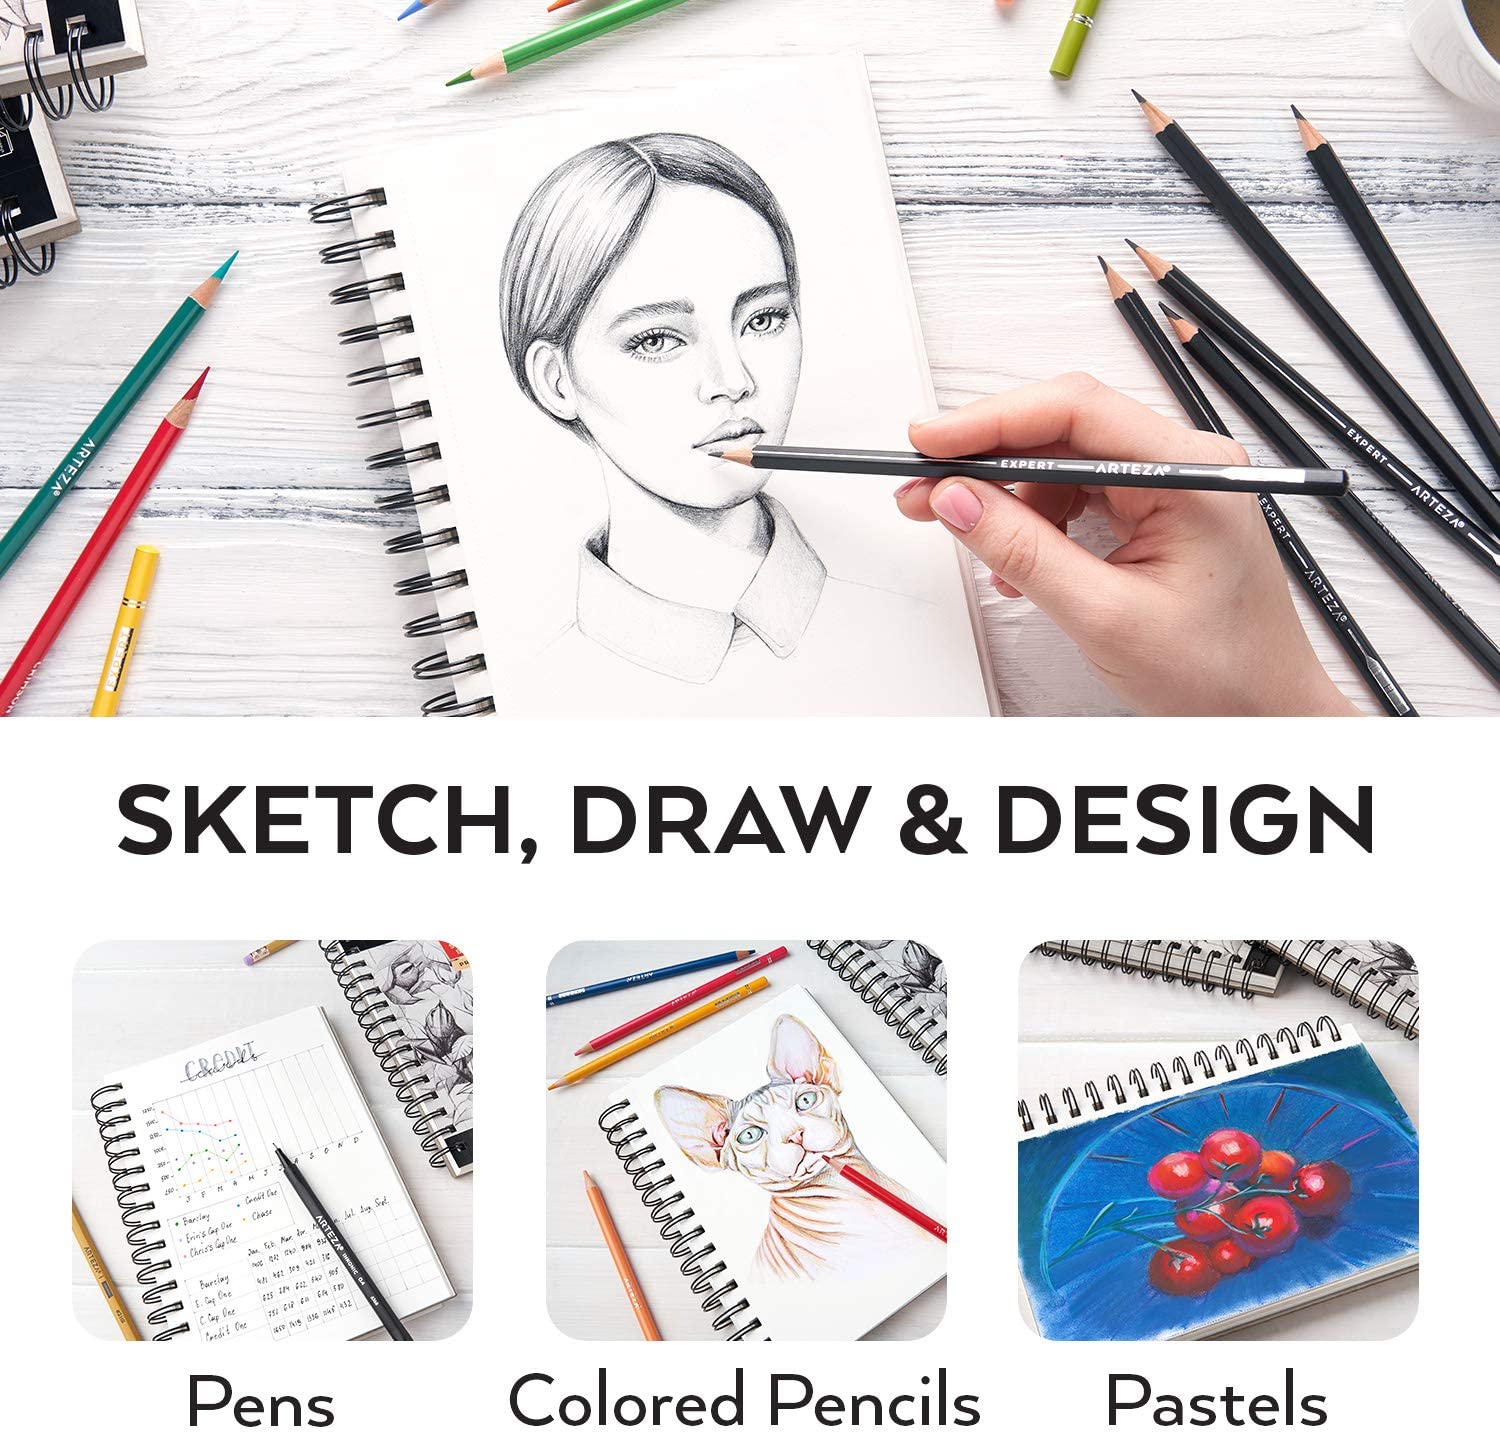 Arteza Sketchbook, 5.5 x 8.5, 100 Sheets - Pack of 3